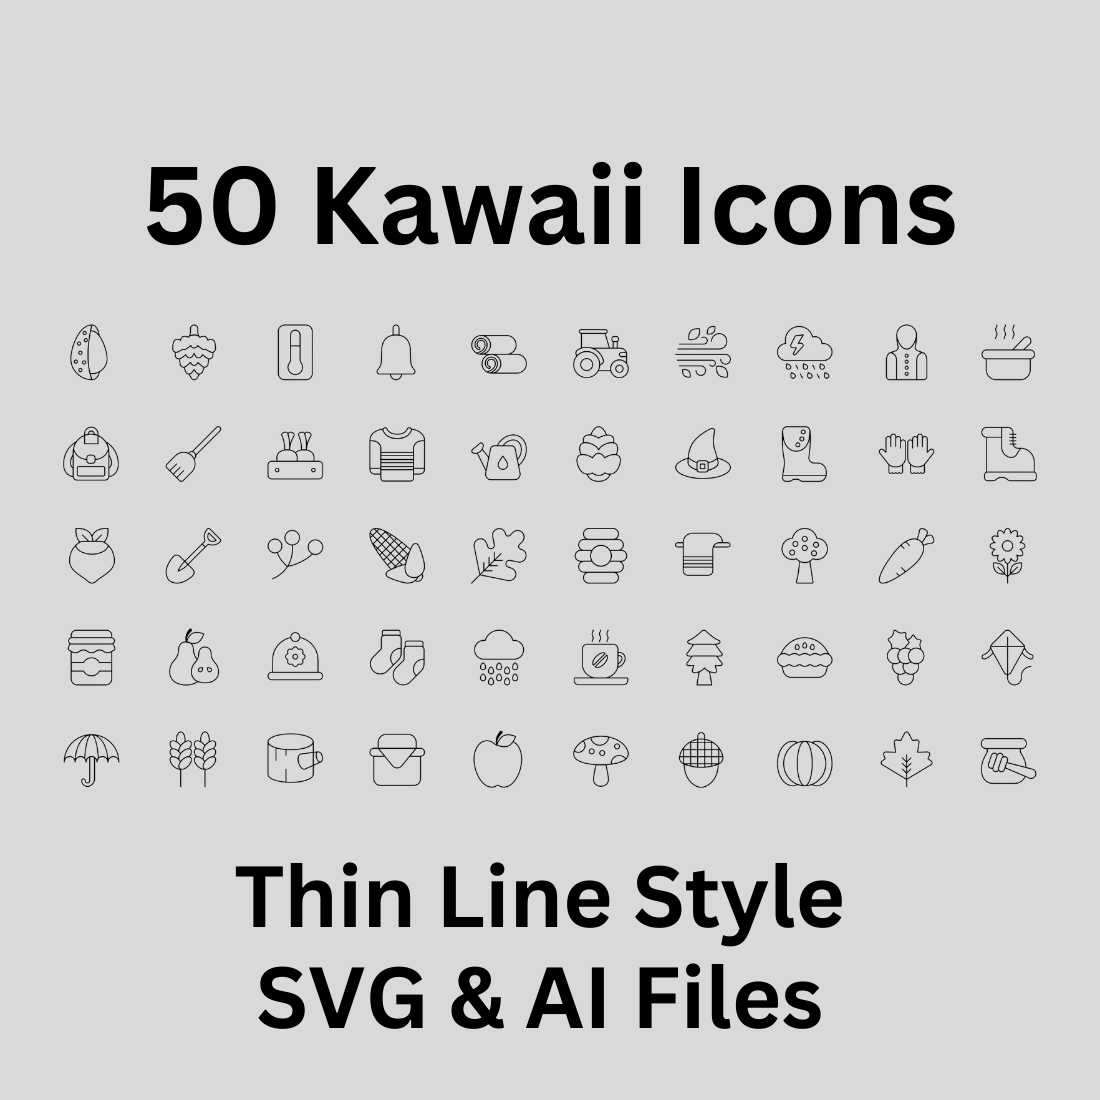 Kawaii Icon Set 50 Outline Icons - SVG And AI Files preview image.